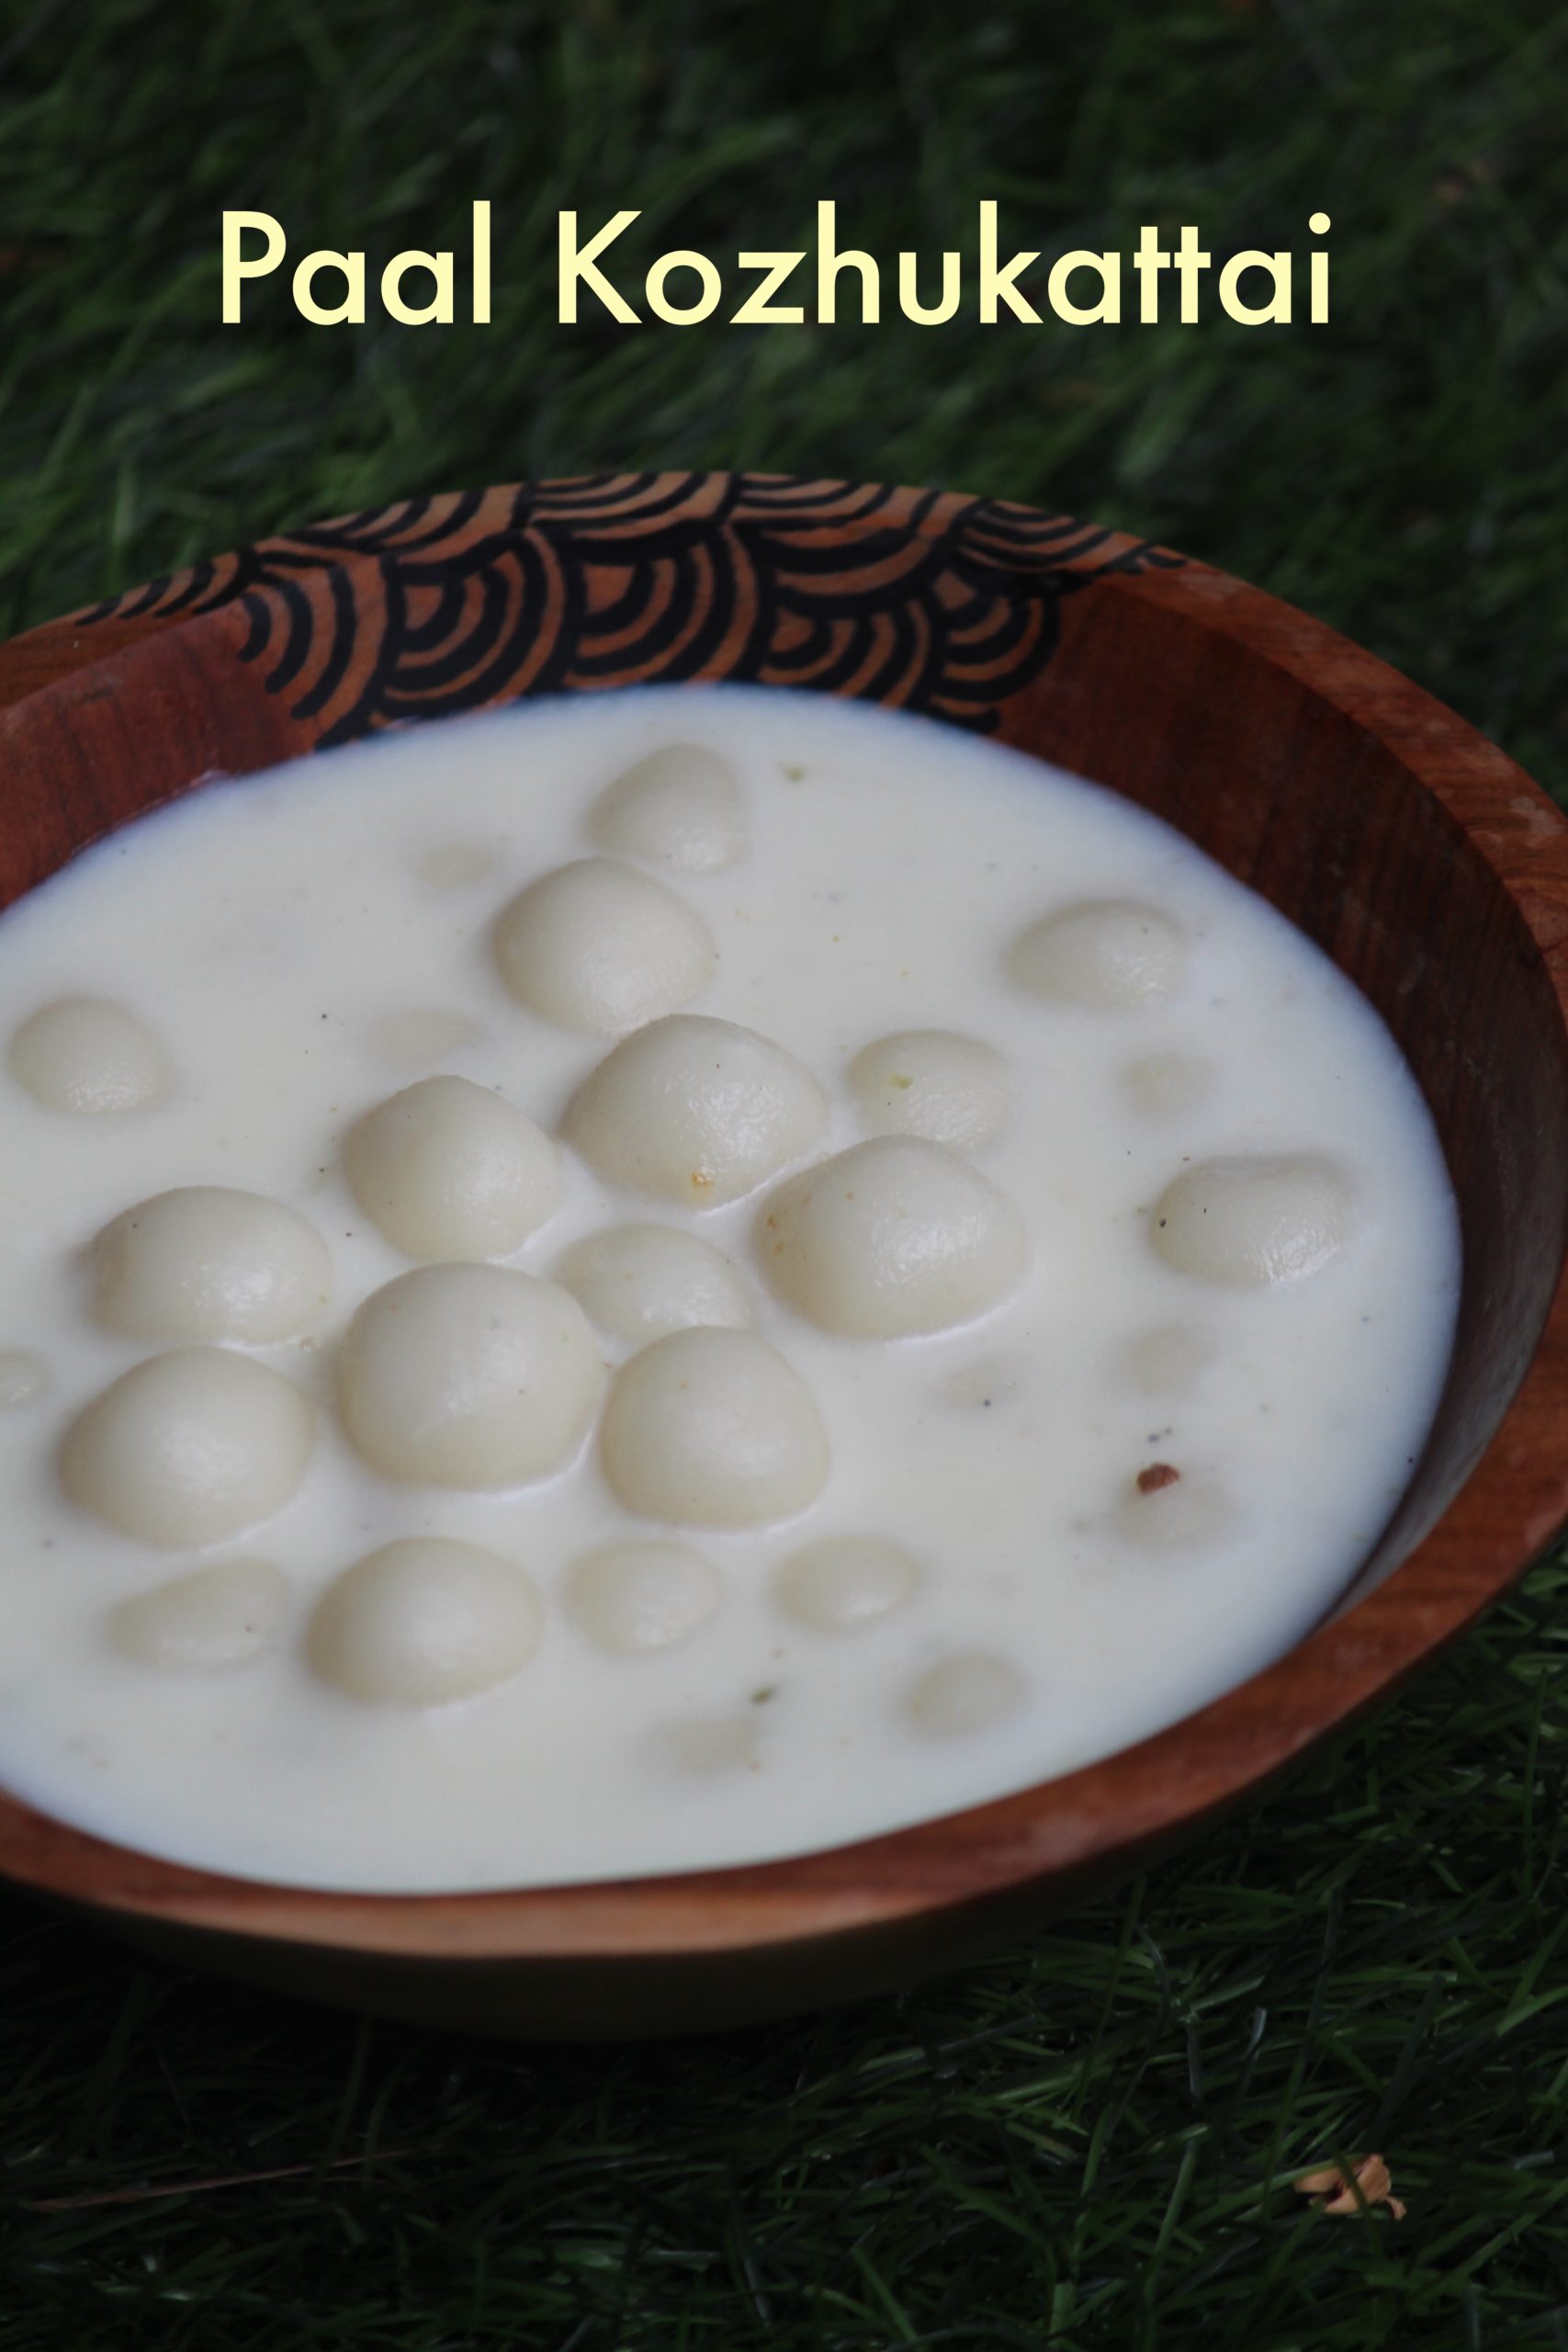 paal kolukattai served in a bowl